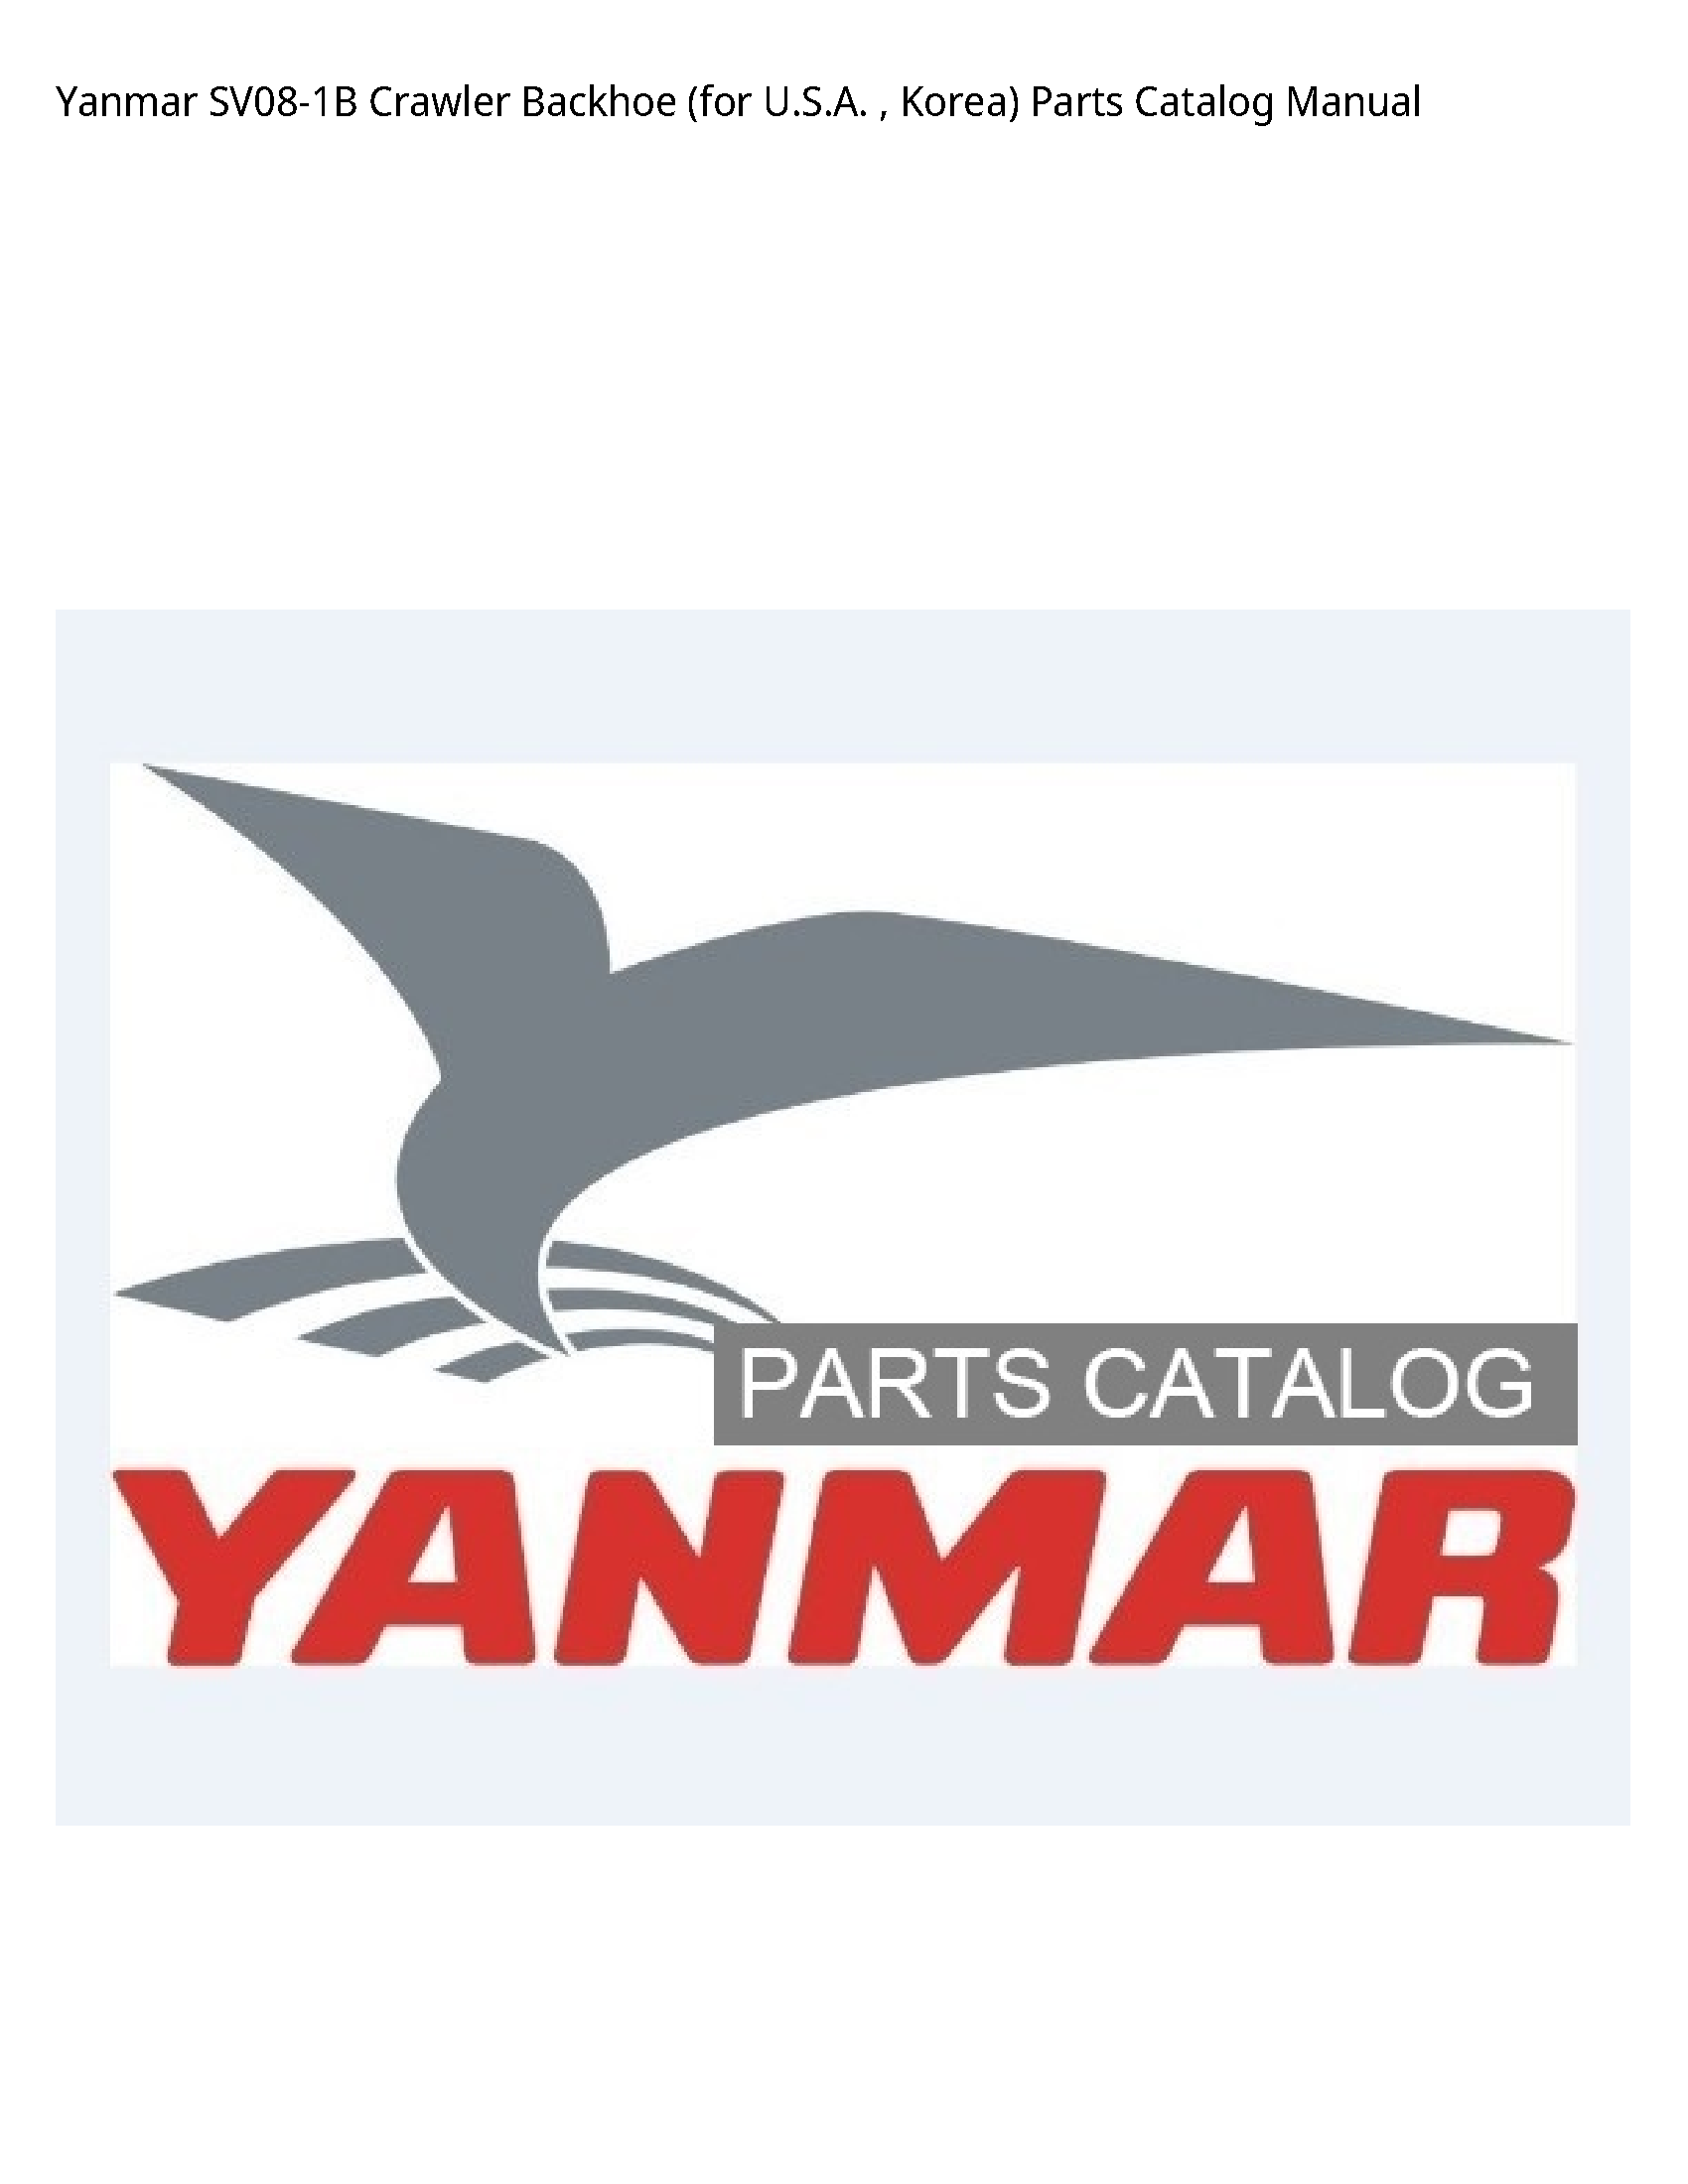 Yanmar SV08-1B Crawler Backhoe (for U.S.A. Korea) Parts Catalog manual